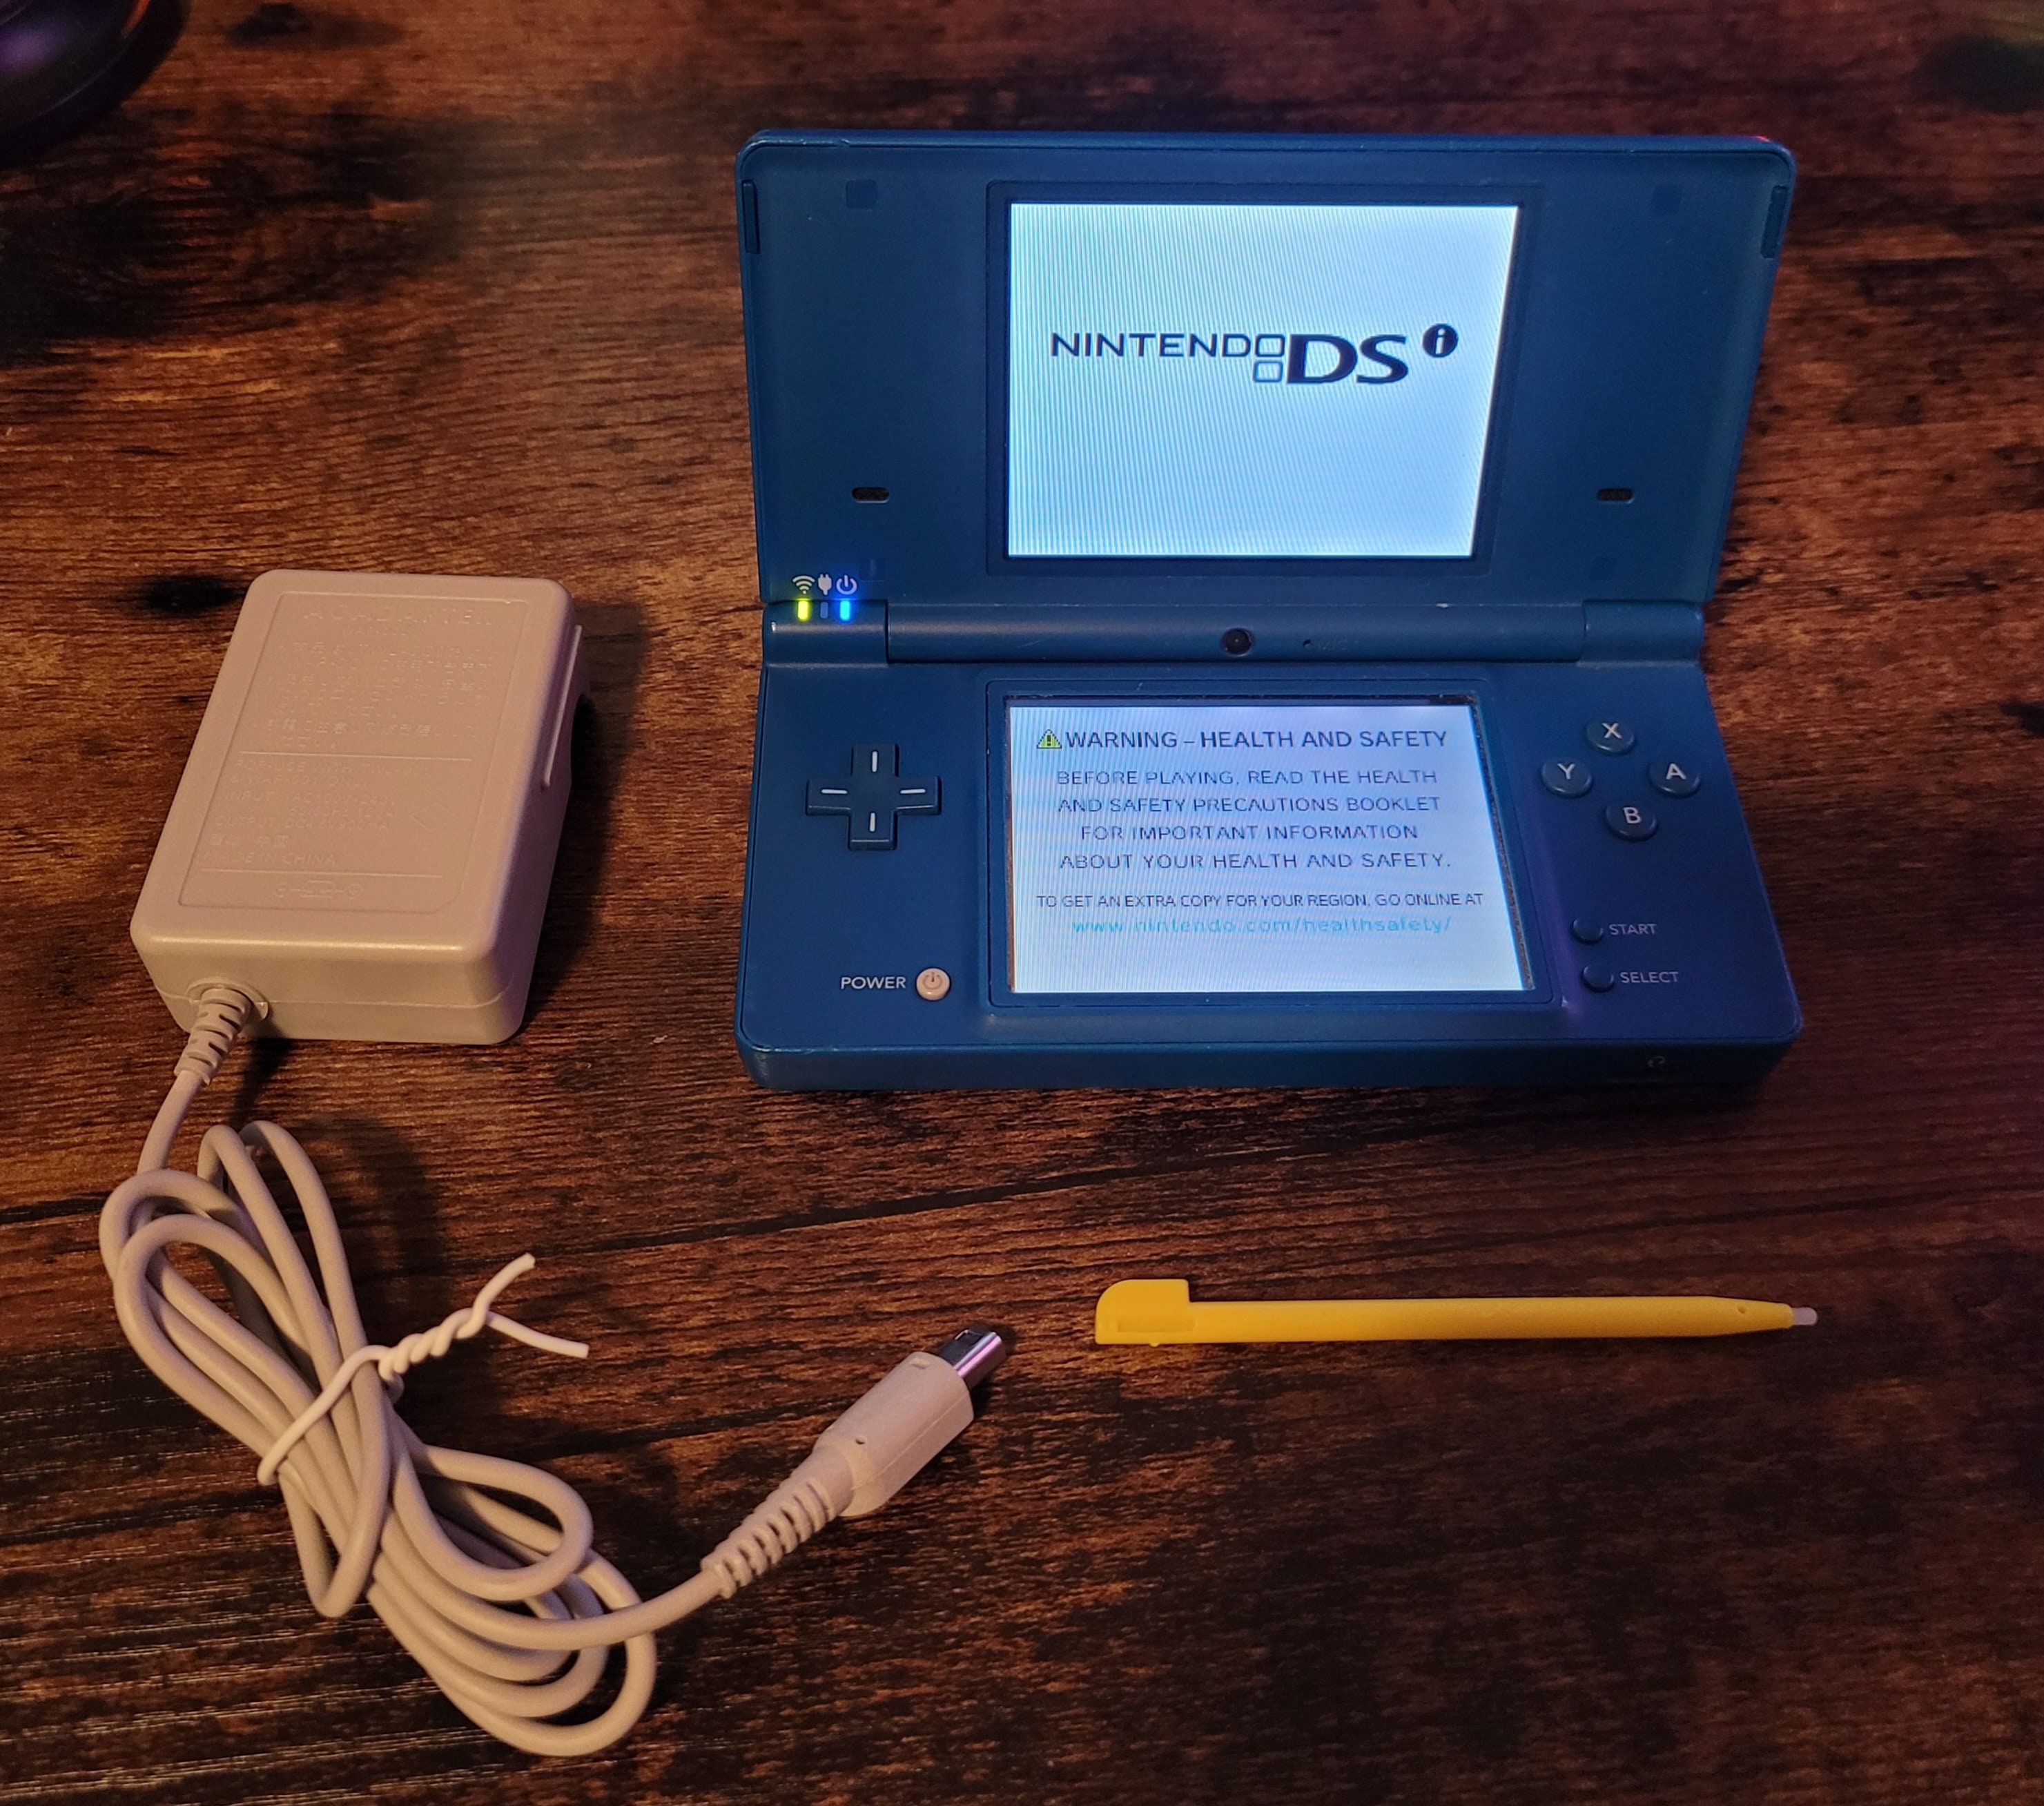 Nintendo DSi XL review: Nintendo DSi XL - CNET